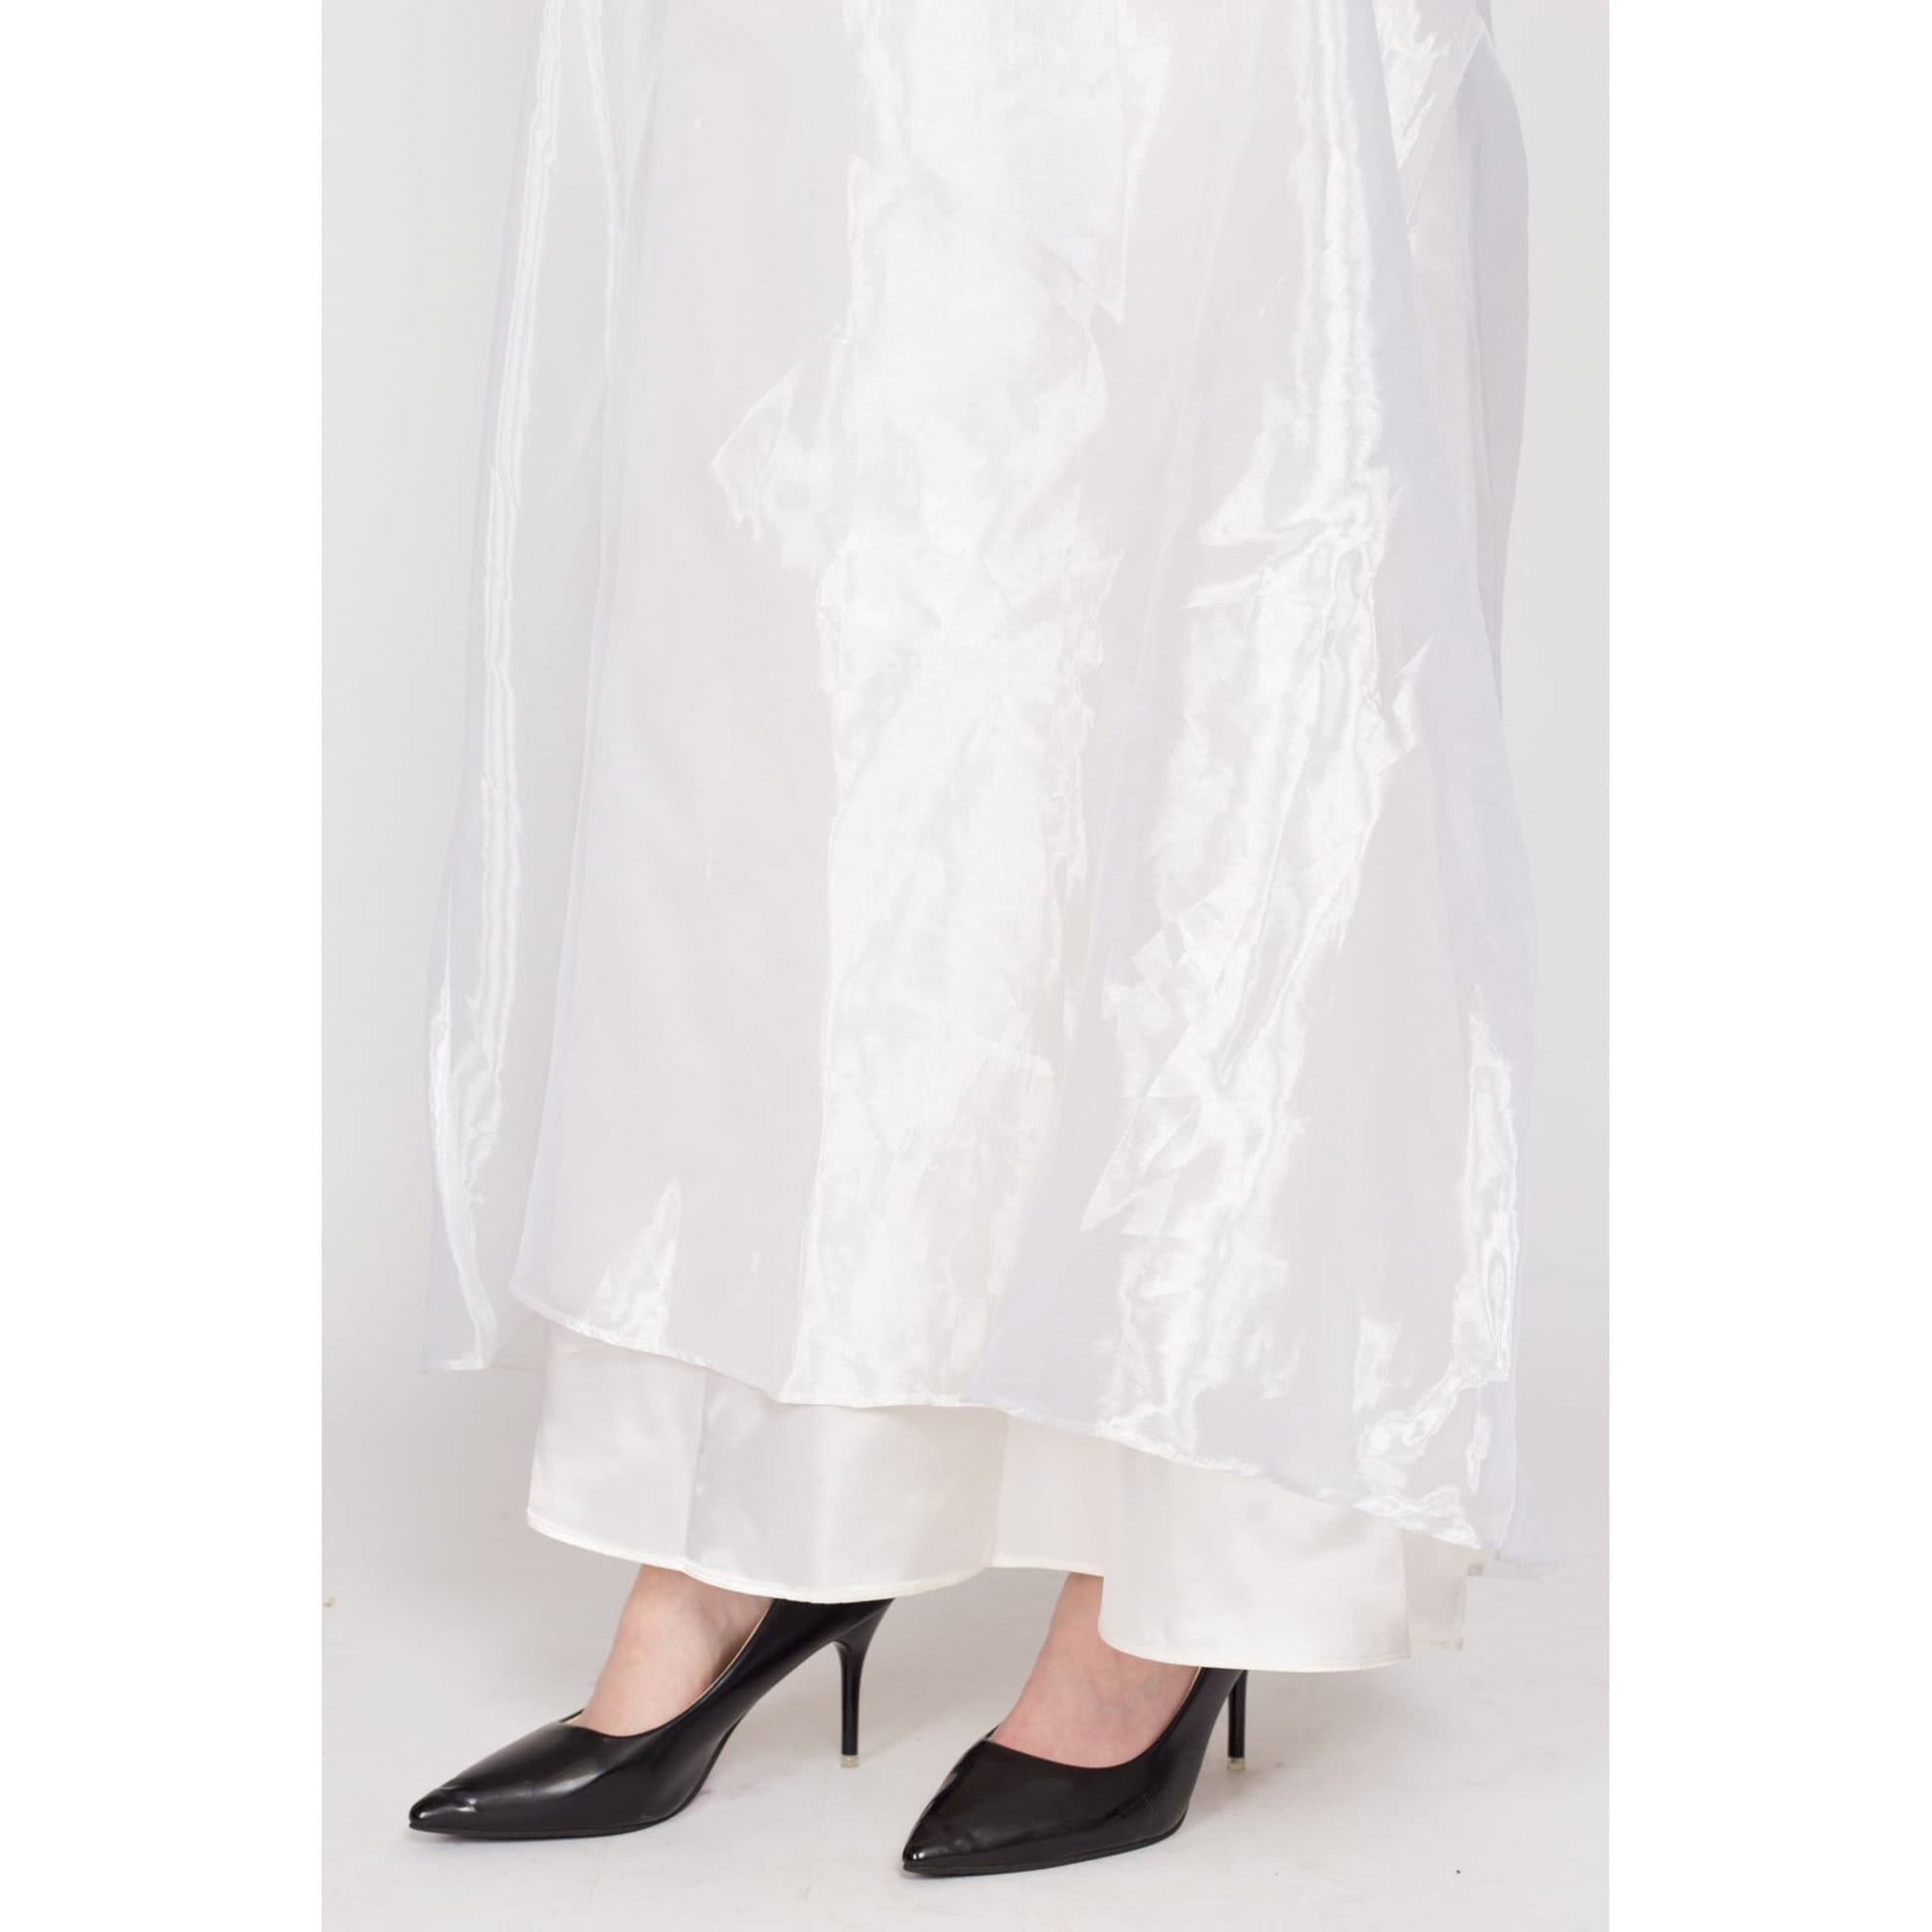 Small 80s White Organza Bridal Maxi Skirt 26.5" | Vintage High Waisted Floor Length Formal Wedding Skirt